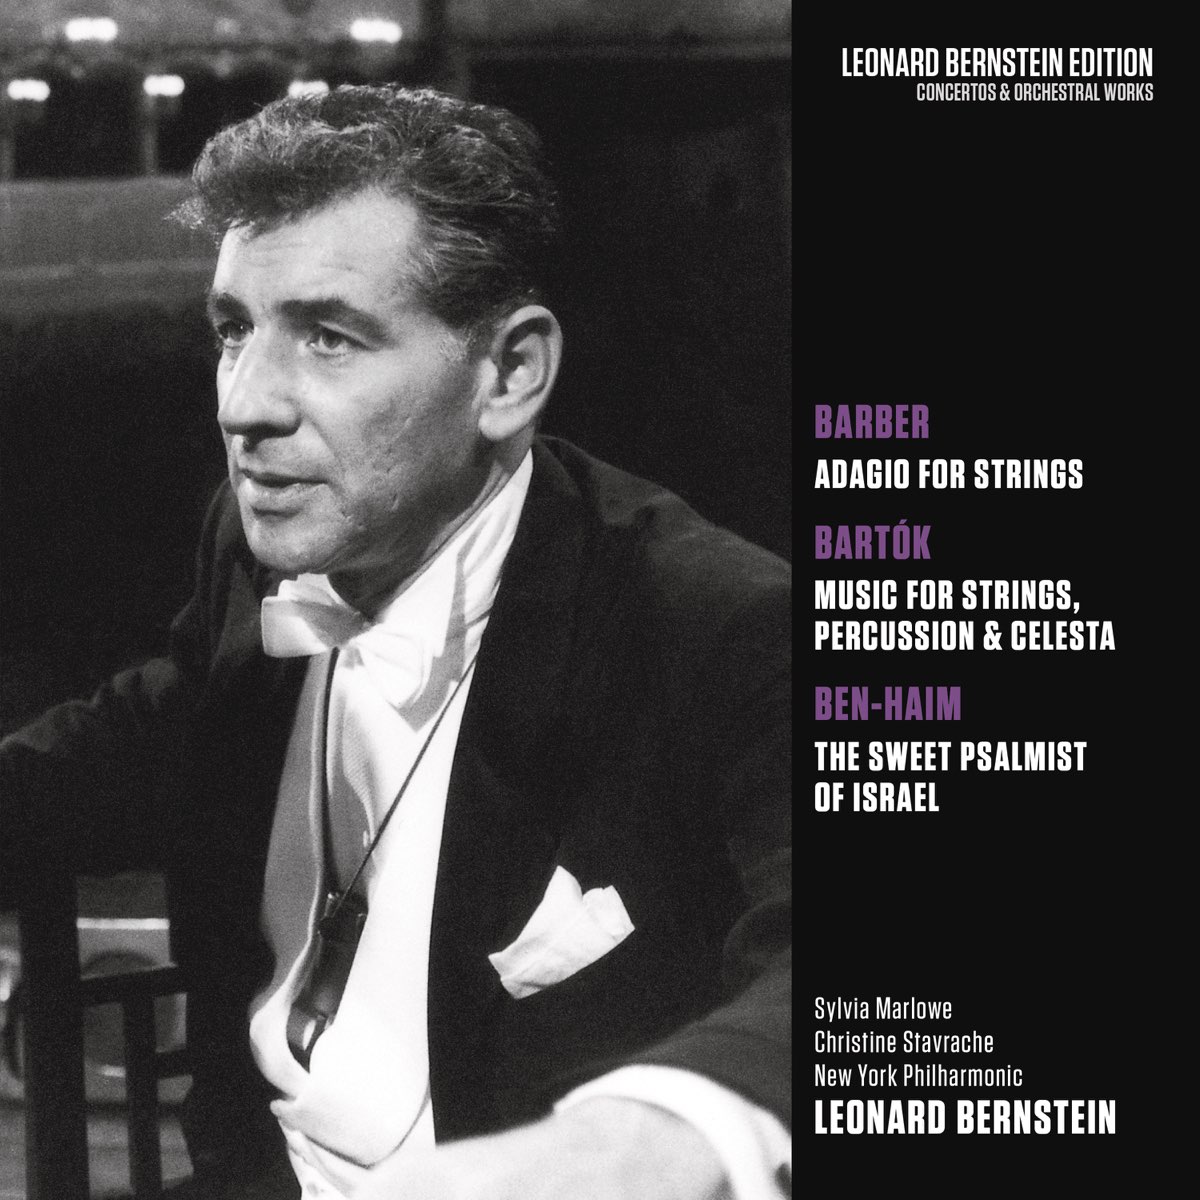 Barber adagio. Leonard Bernstein: New York Philharmonic Orchestra. Adagio for Strings, op. 11 Samuel Barber. «Музыка — всем» Бернстайн.